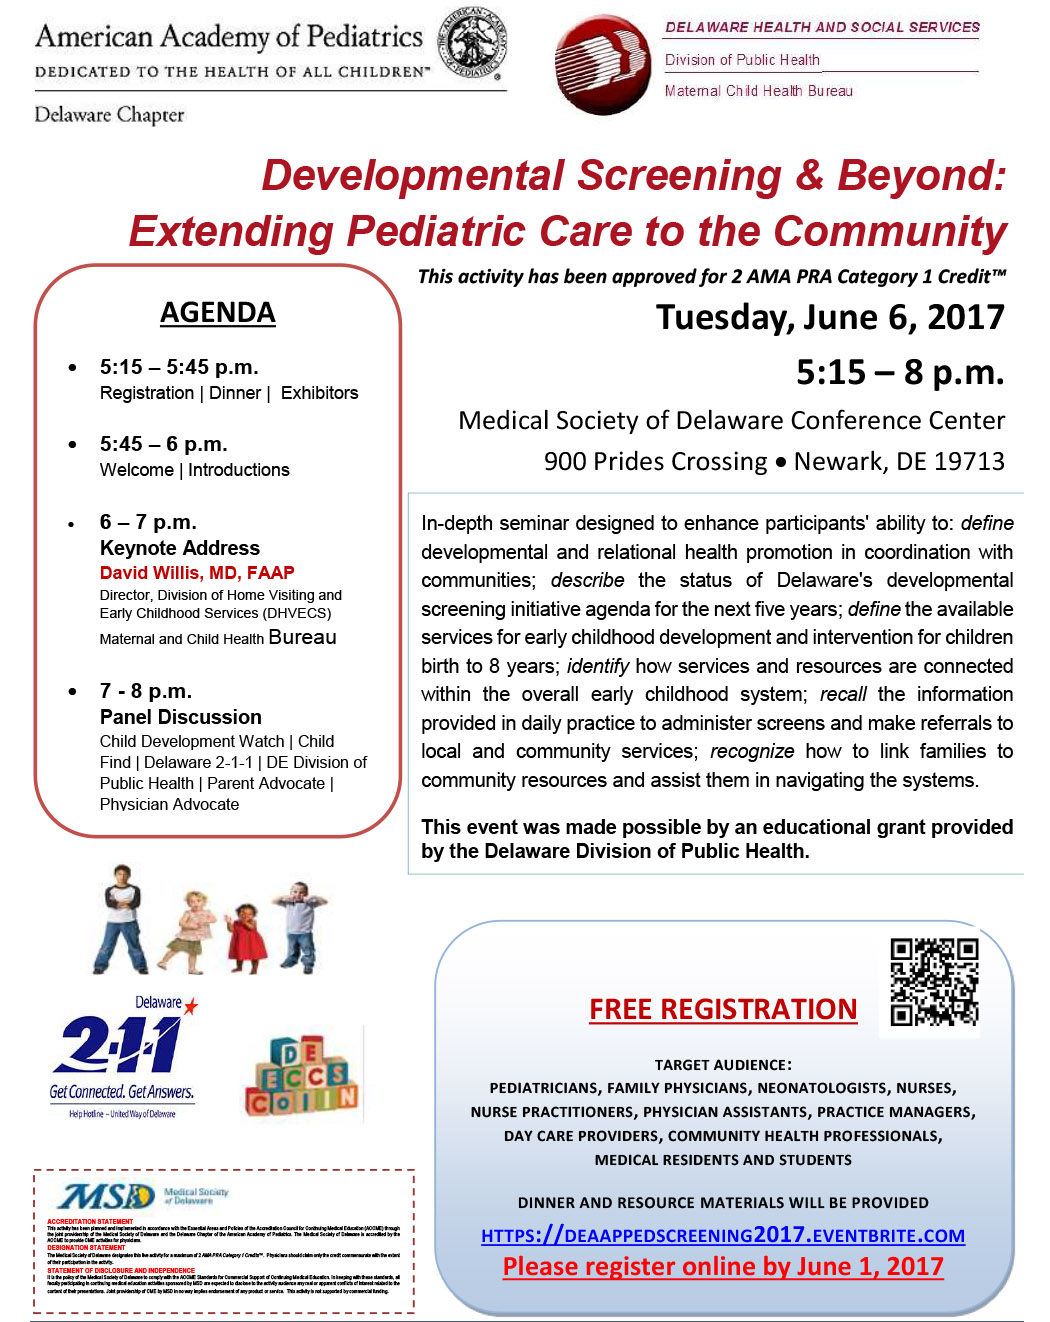 Developmental Screening & Beyond: Extending Pediatric Care to the Community